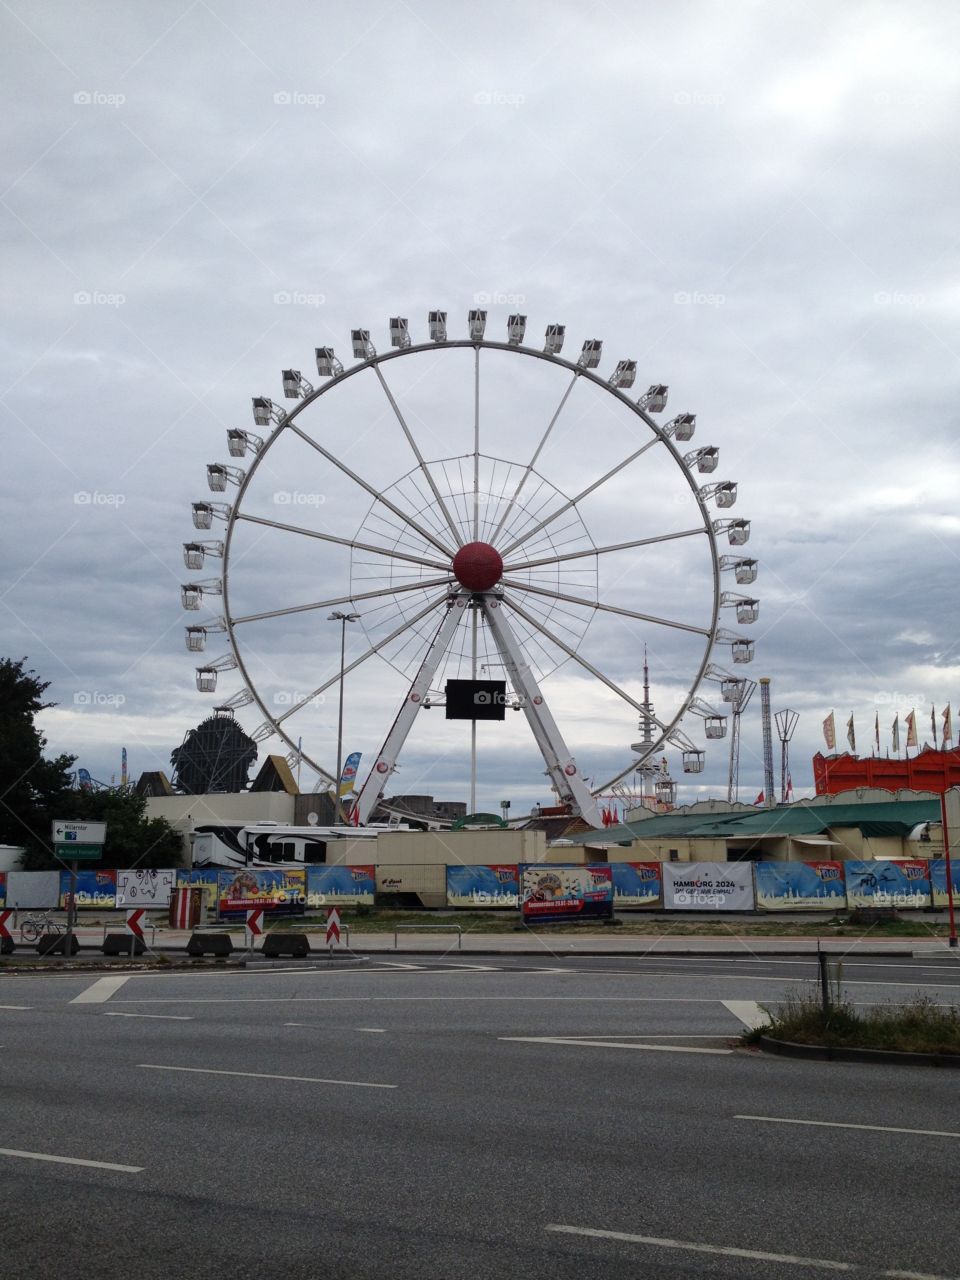 The great Ferris Wheel of Hamburg